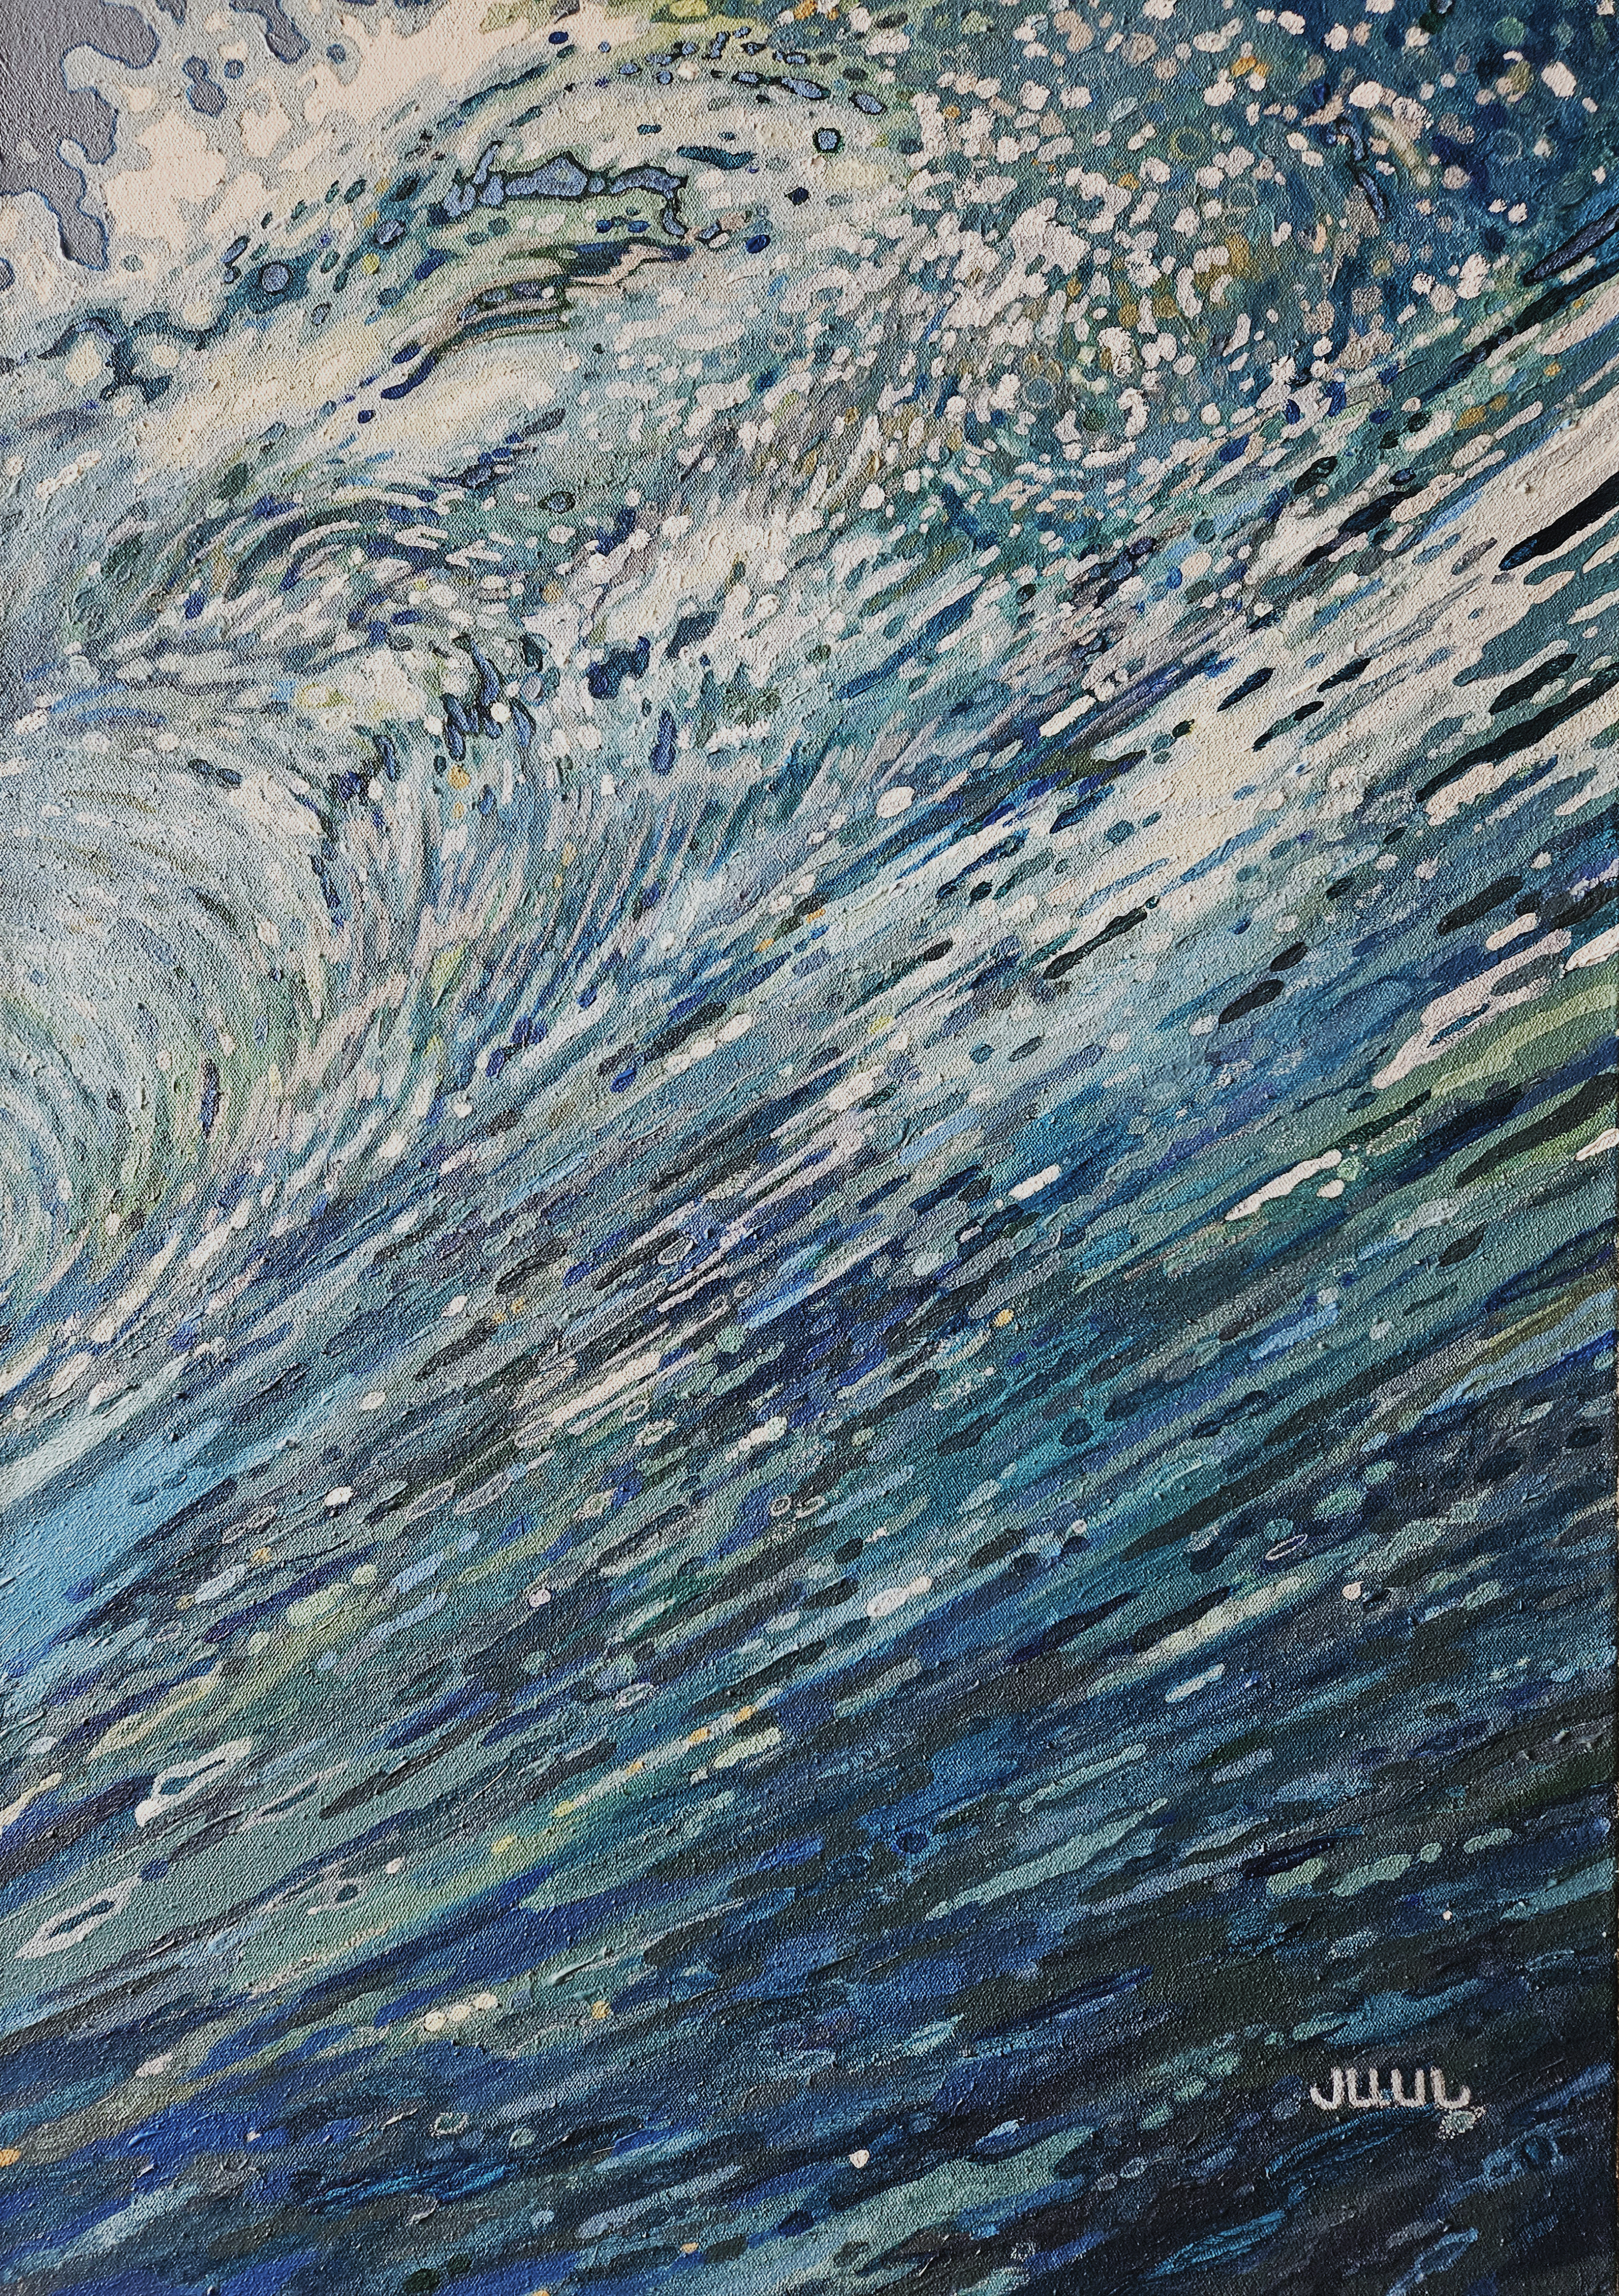 MARGARET JUUL - Waves Churning - Acrylic on Canvas - 36x24 inches